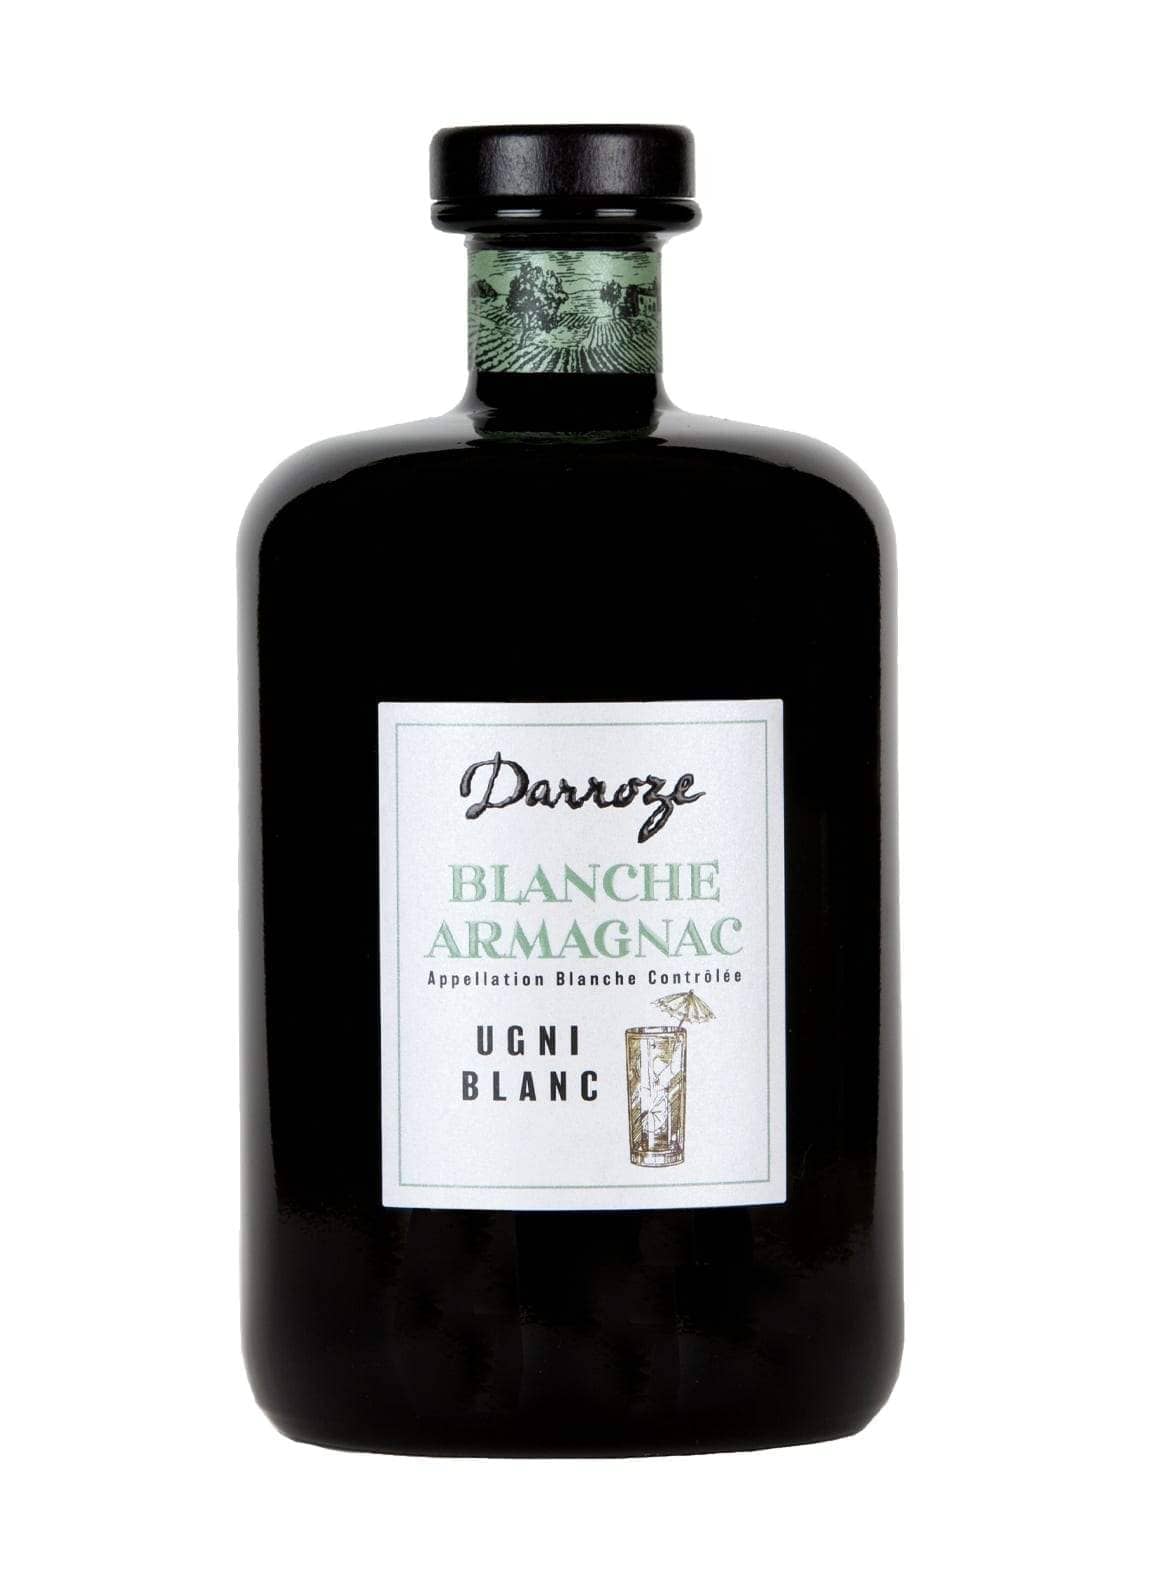 Darroze Grand Bas Armagnac Ugni Blanche 49% 700ml | Brandy | Shop online at Spirits of France